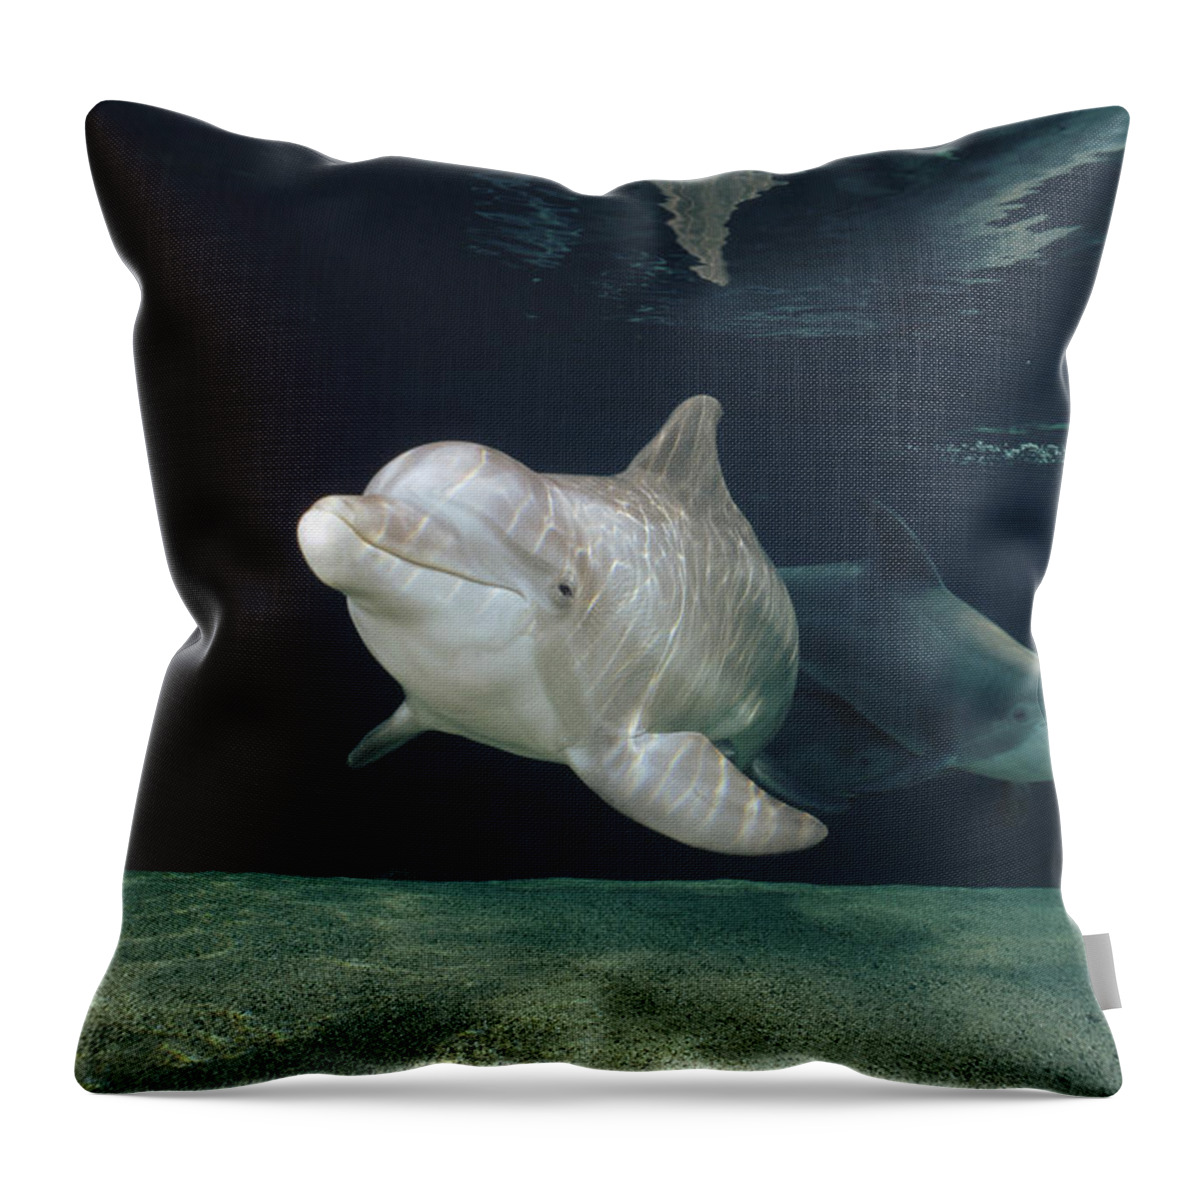 Feb0514 Throw Pillow featuring the photograph Bottlenose Dolphin Pair Hawaii by Flip Nicklin